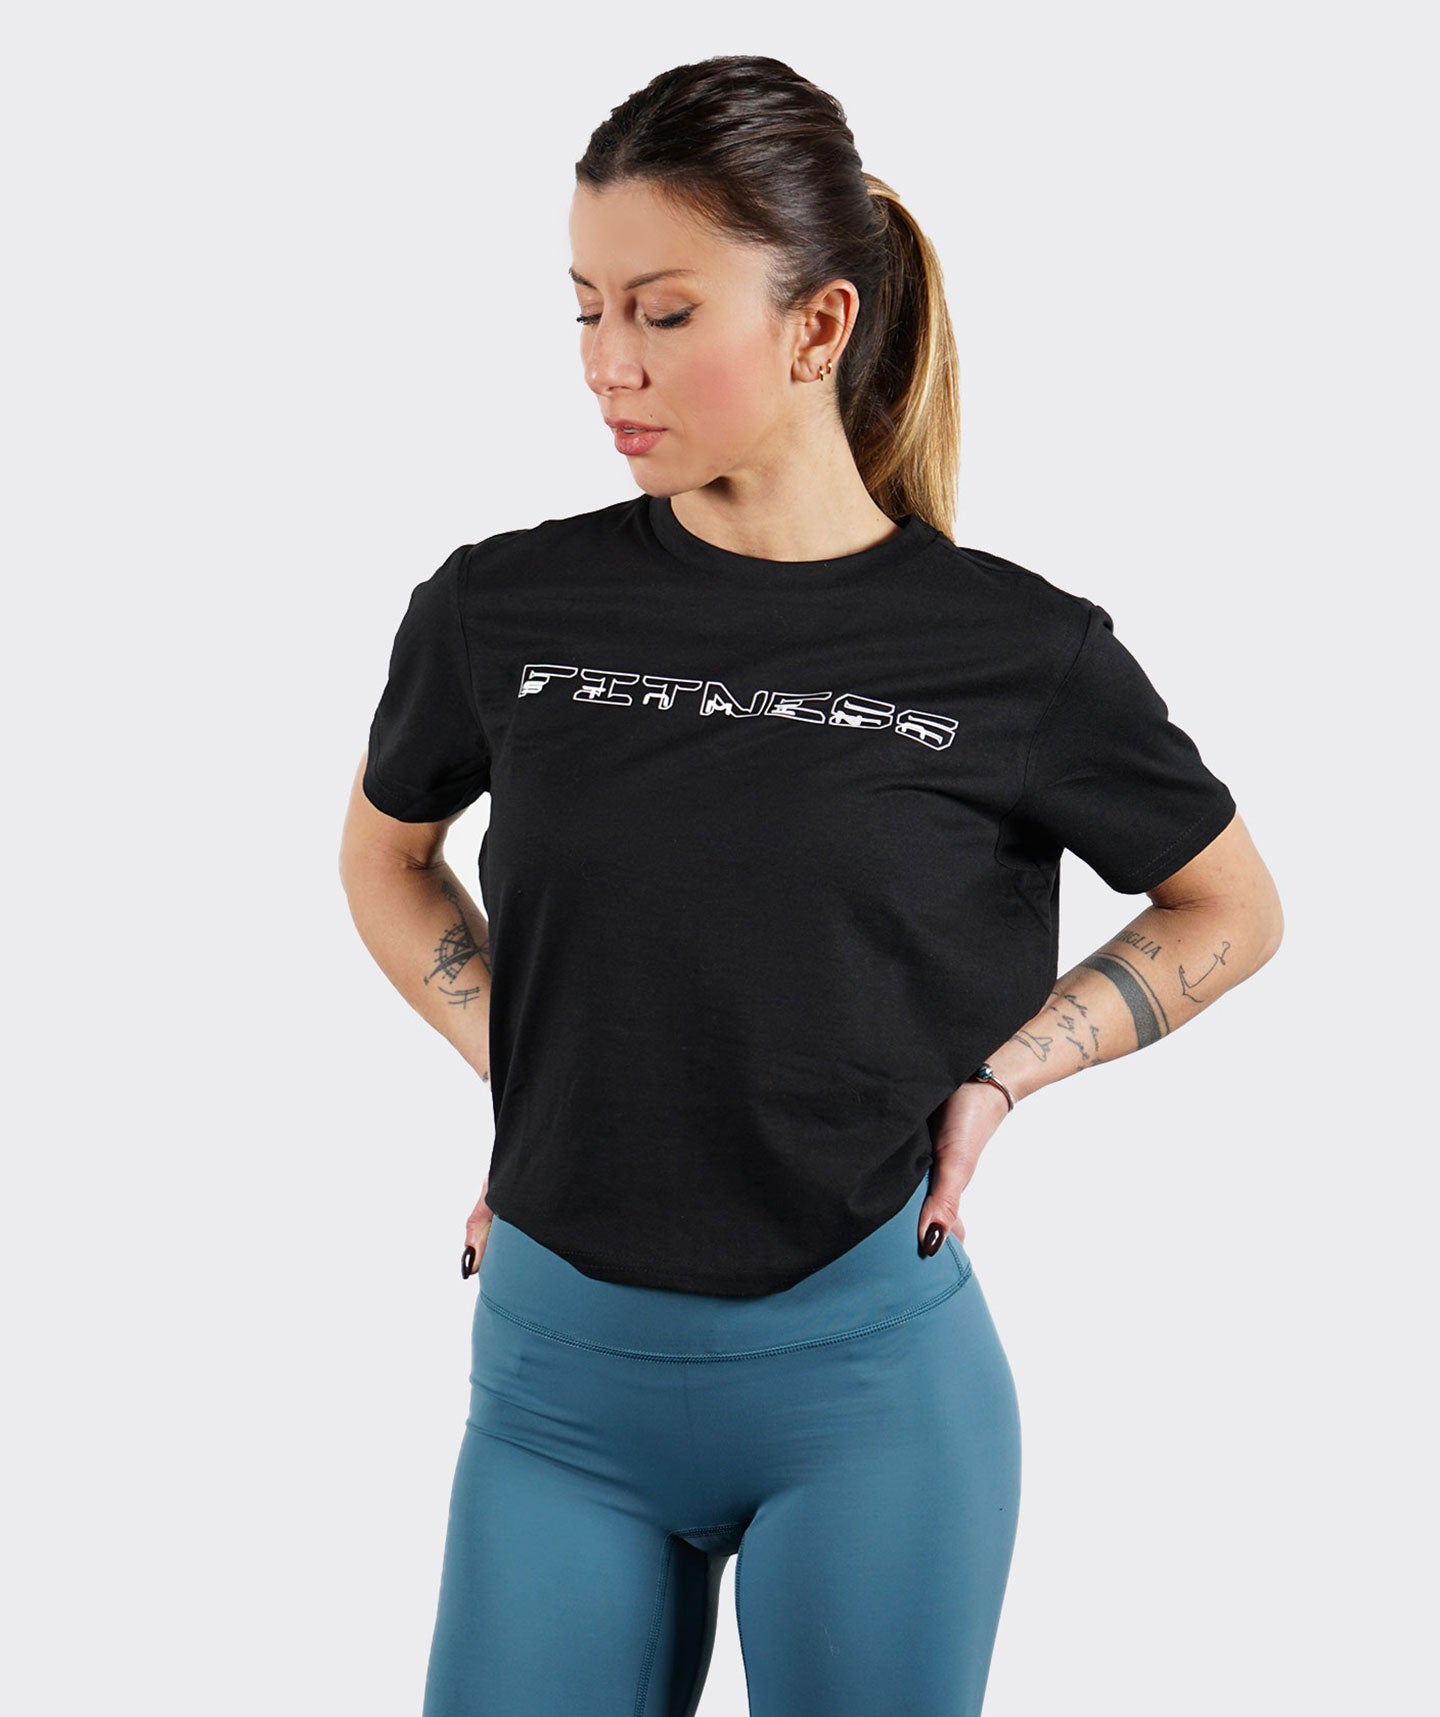 T-Shirt "Future" donna nera - STMN Fitness